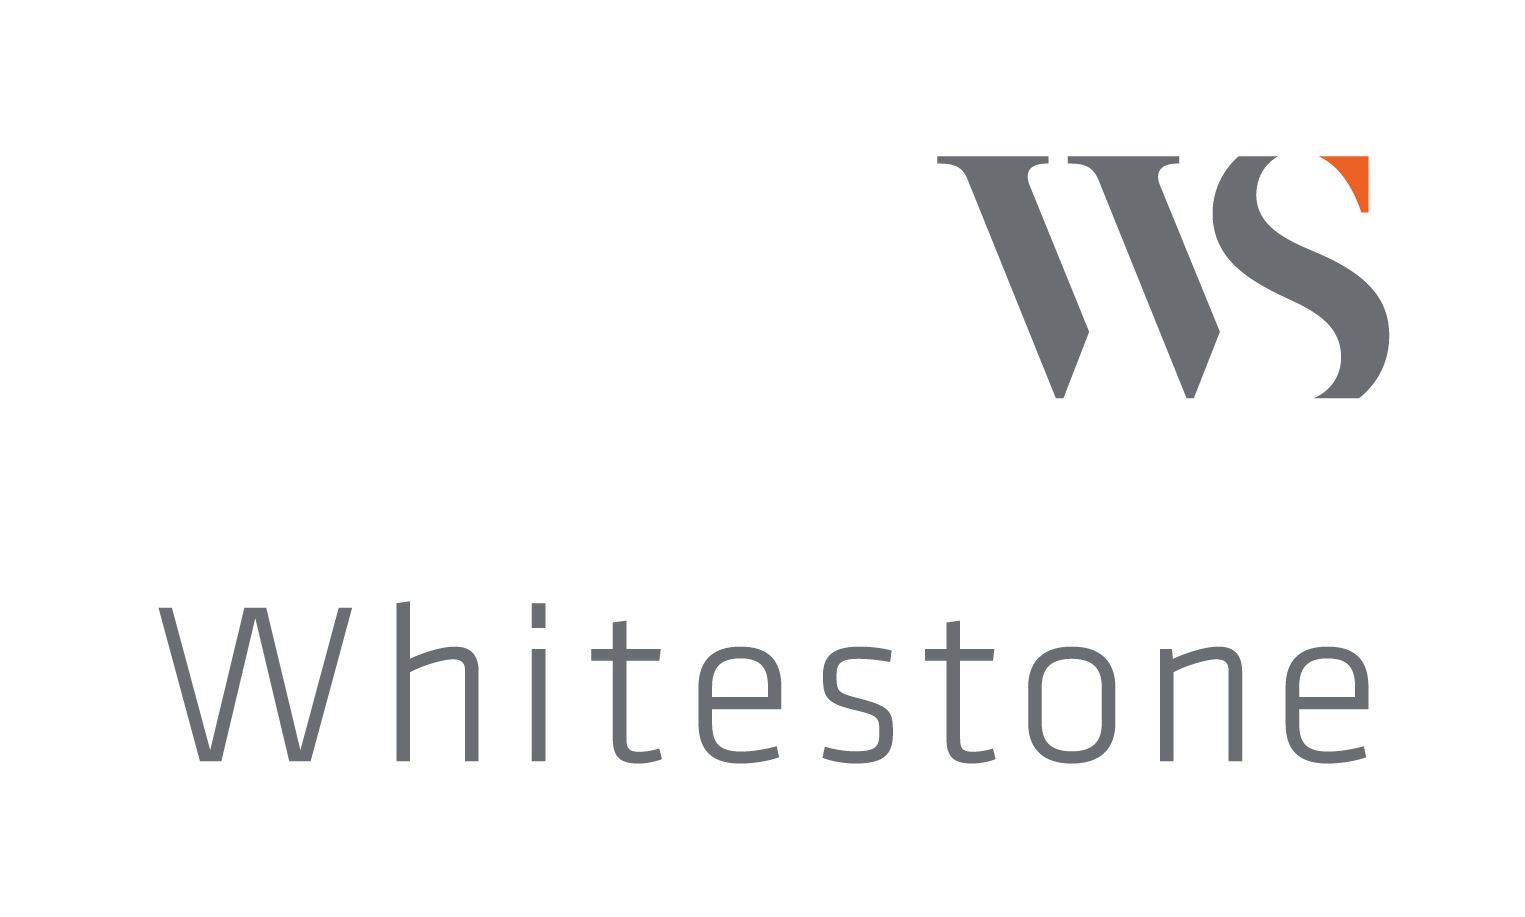 Whitestone successverhaal